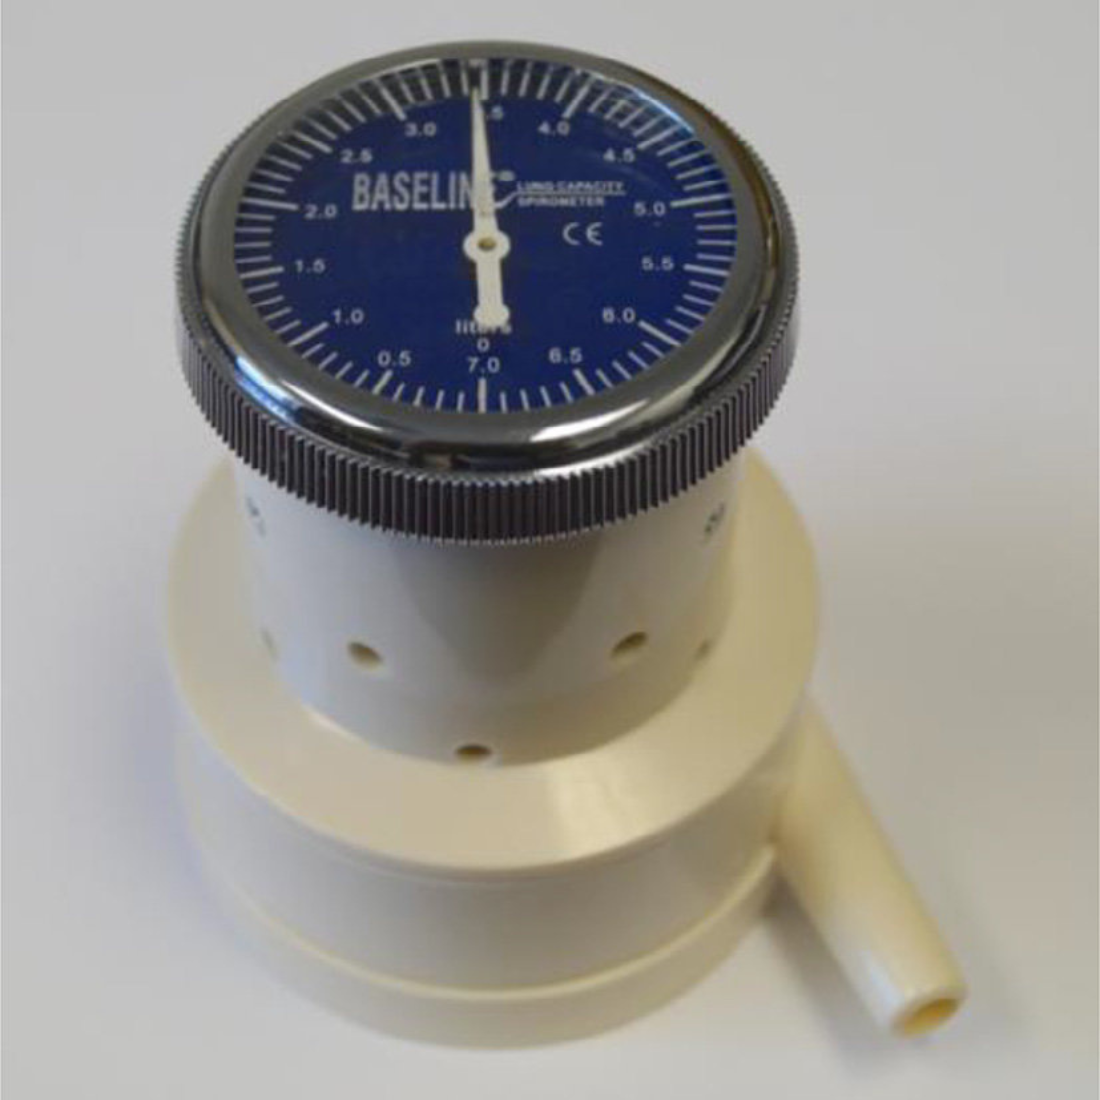 Baseline Spirometer - Windmill Type